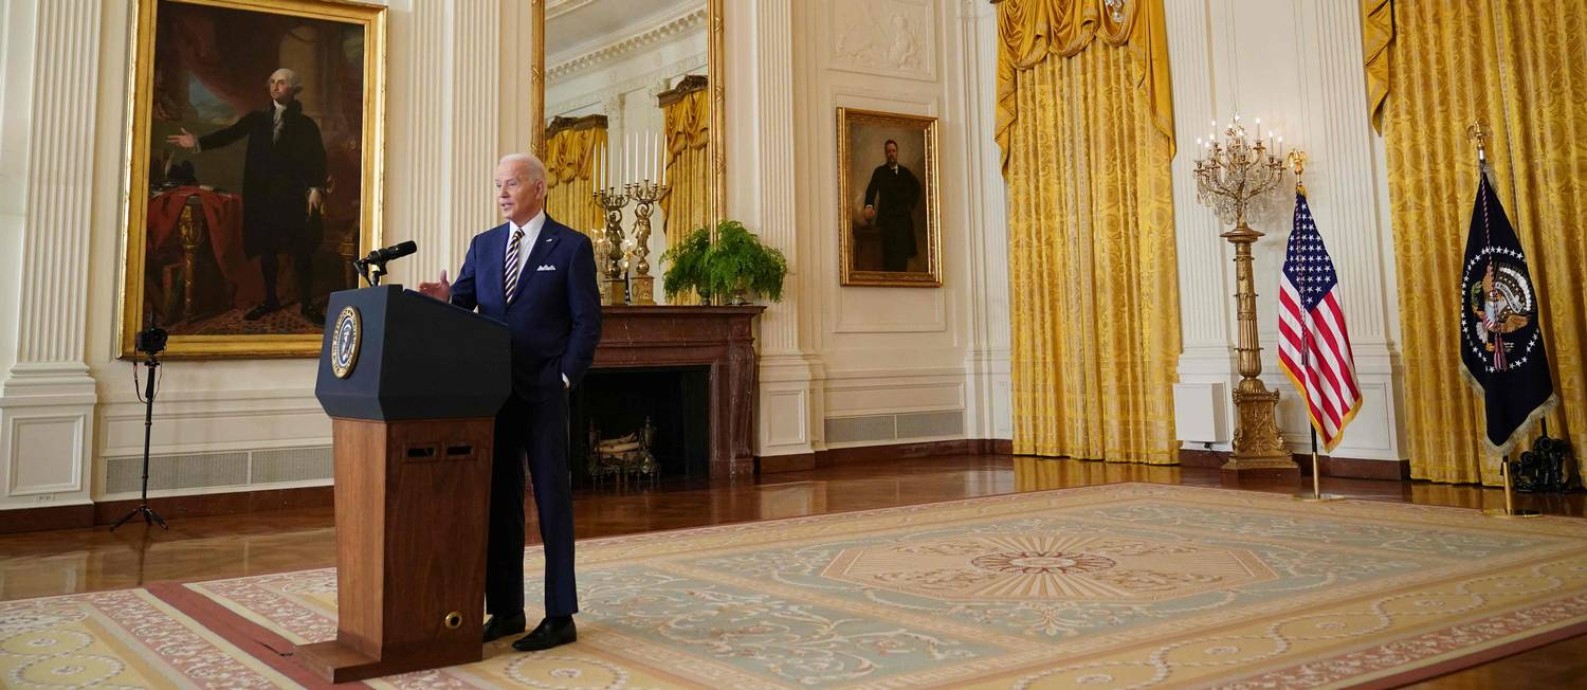 Joe Biden concede entrevista coletiva na véspera de completar um ano à frente da Casa Branca Foto: MANDEL NGAN / AFP